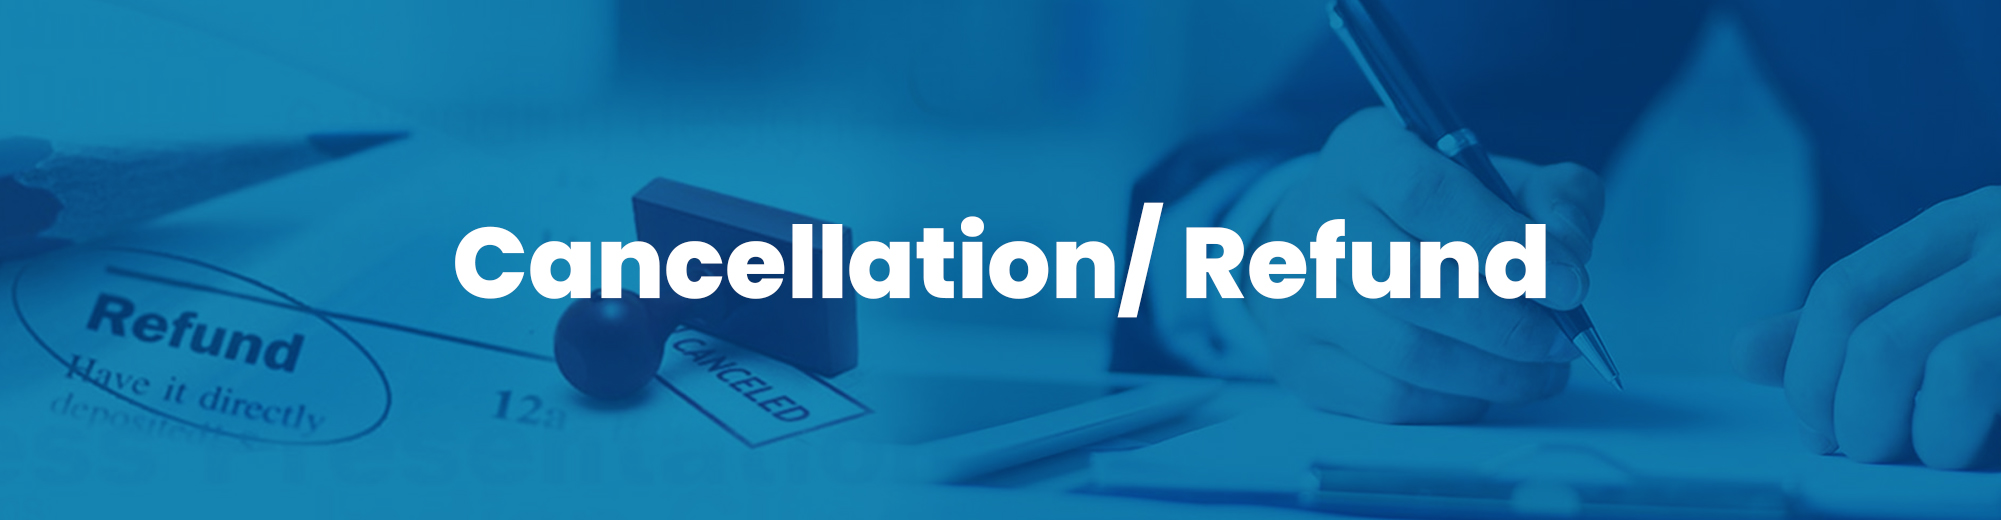 Cancellation Refund or Return Policy Background